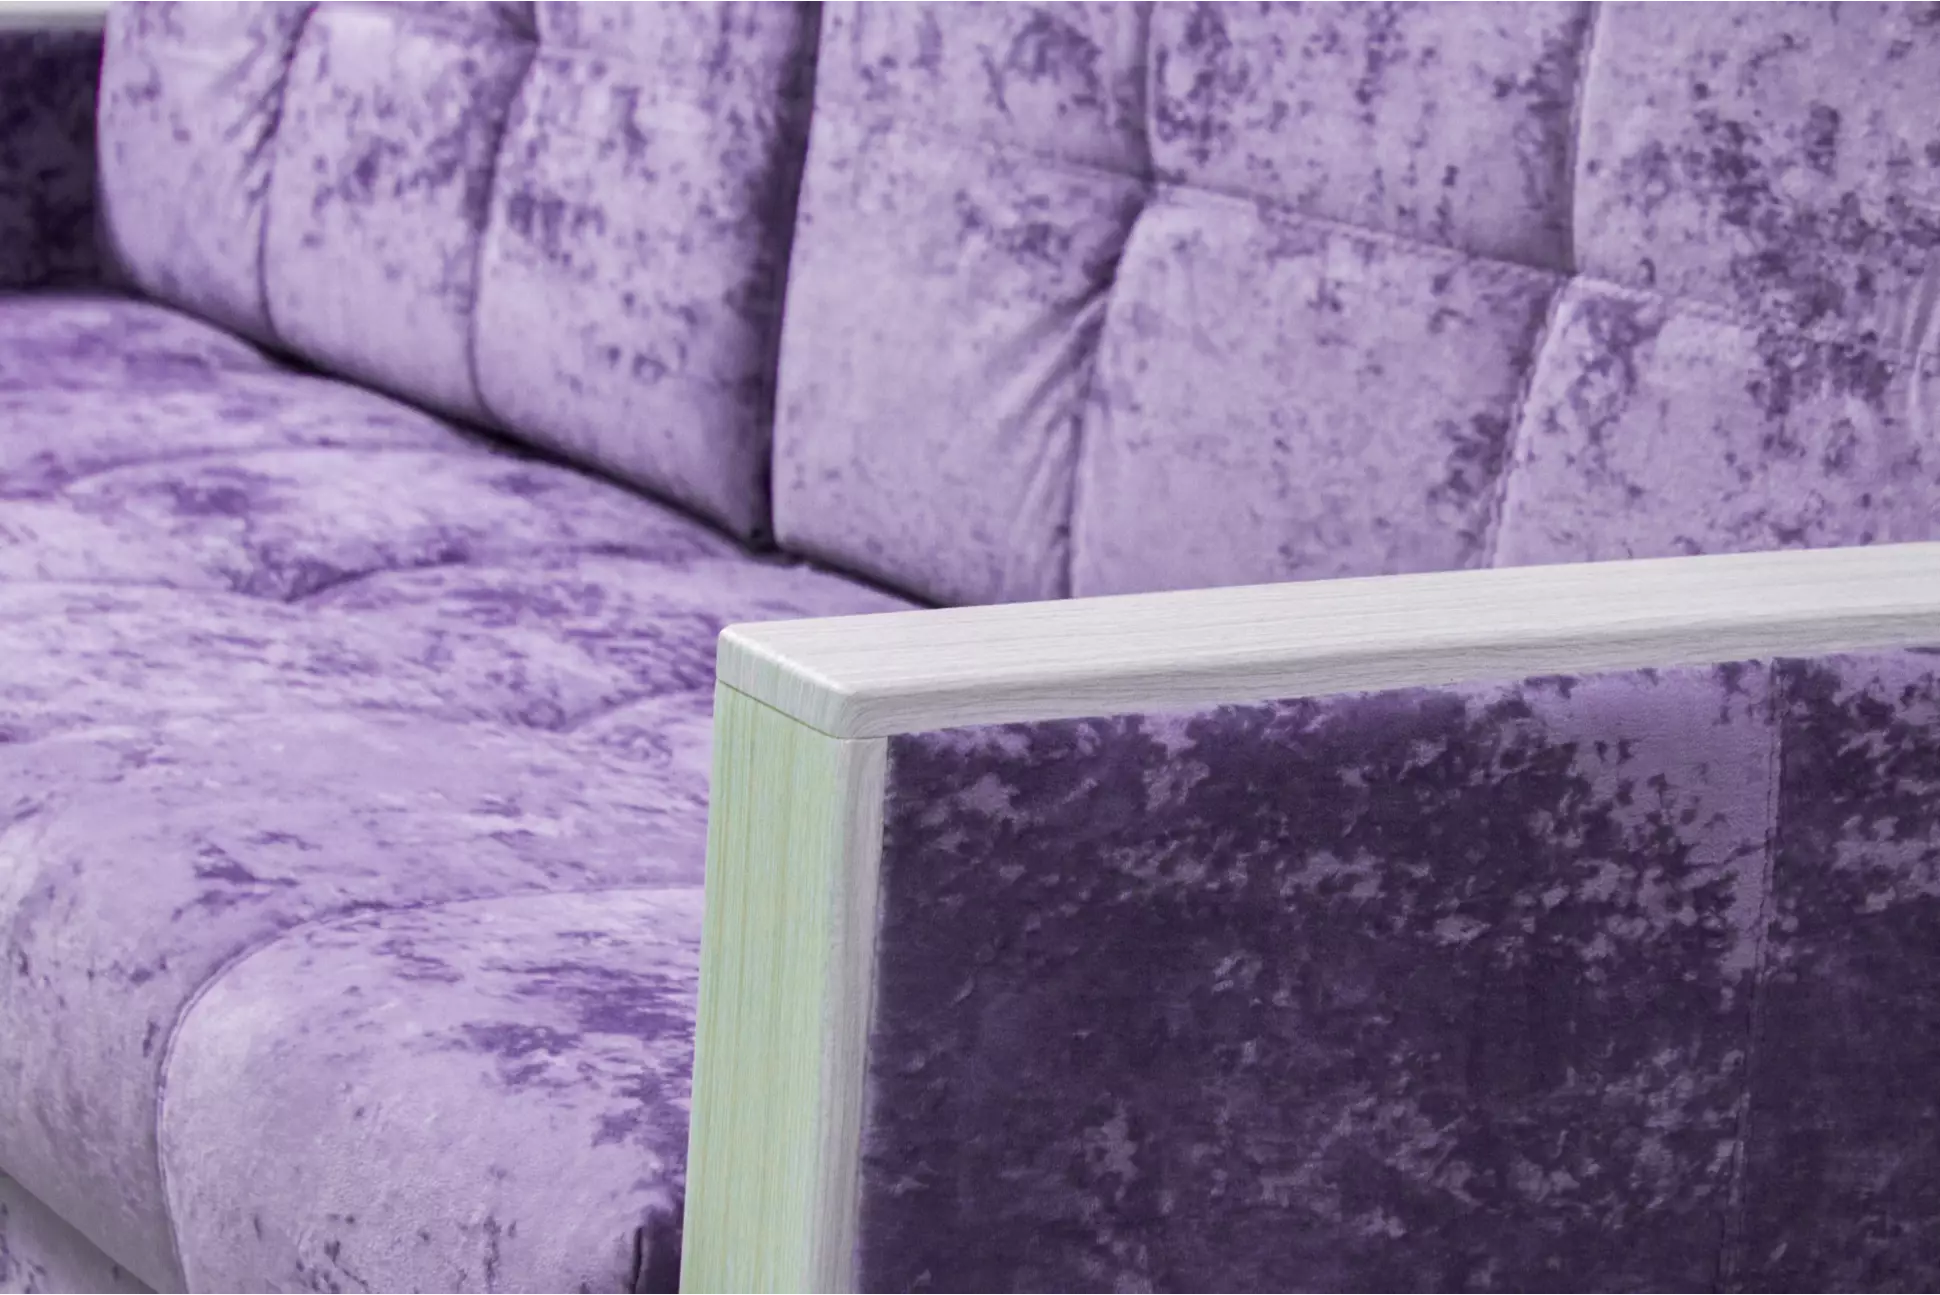 Диван прямой Адель 2, Plush purple velvet, декор Рамух белый